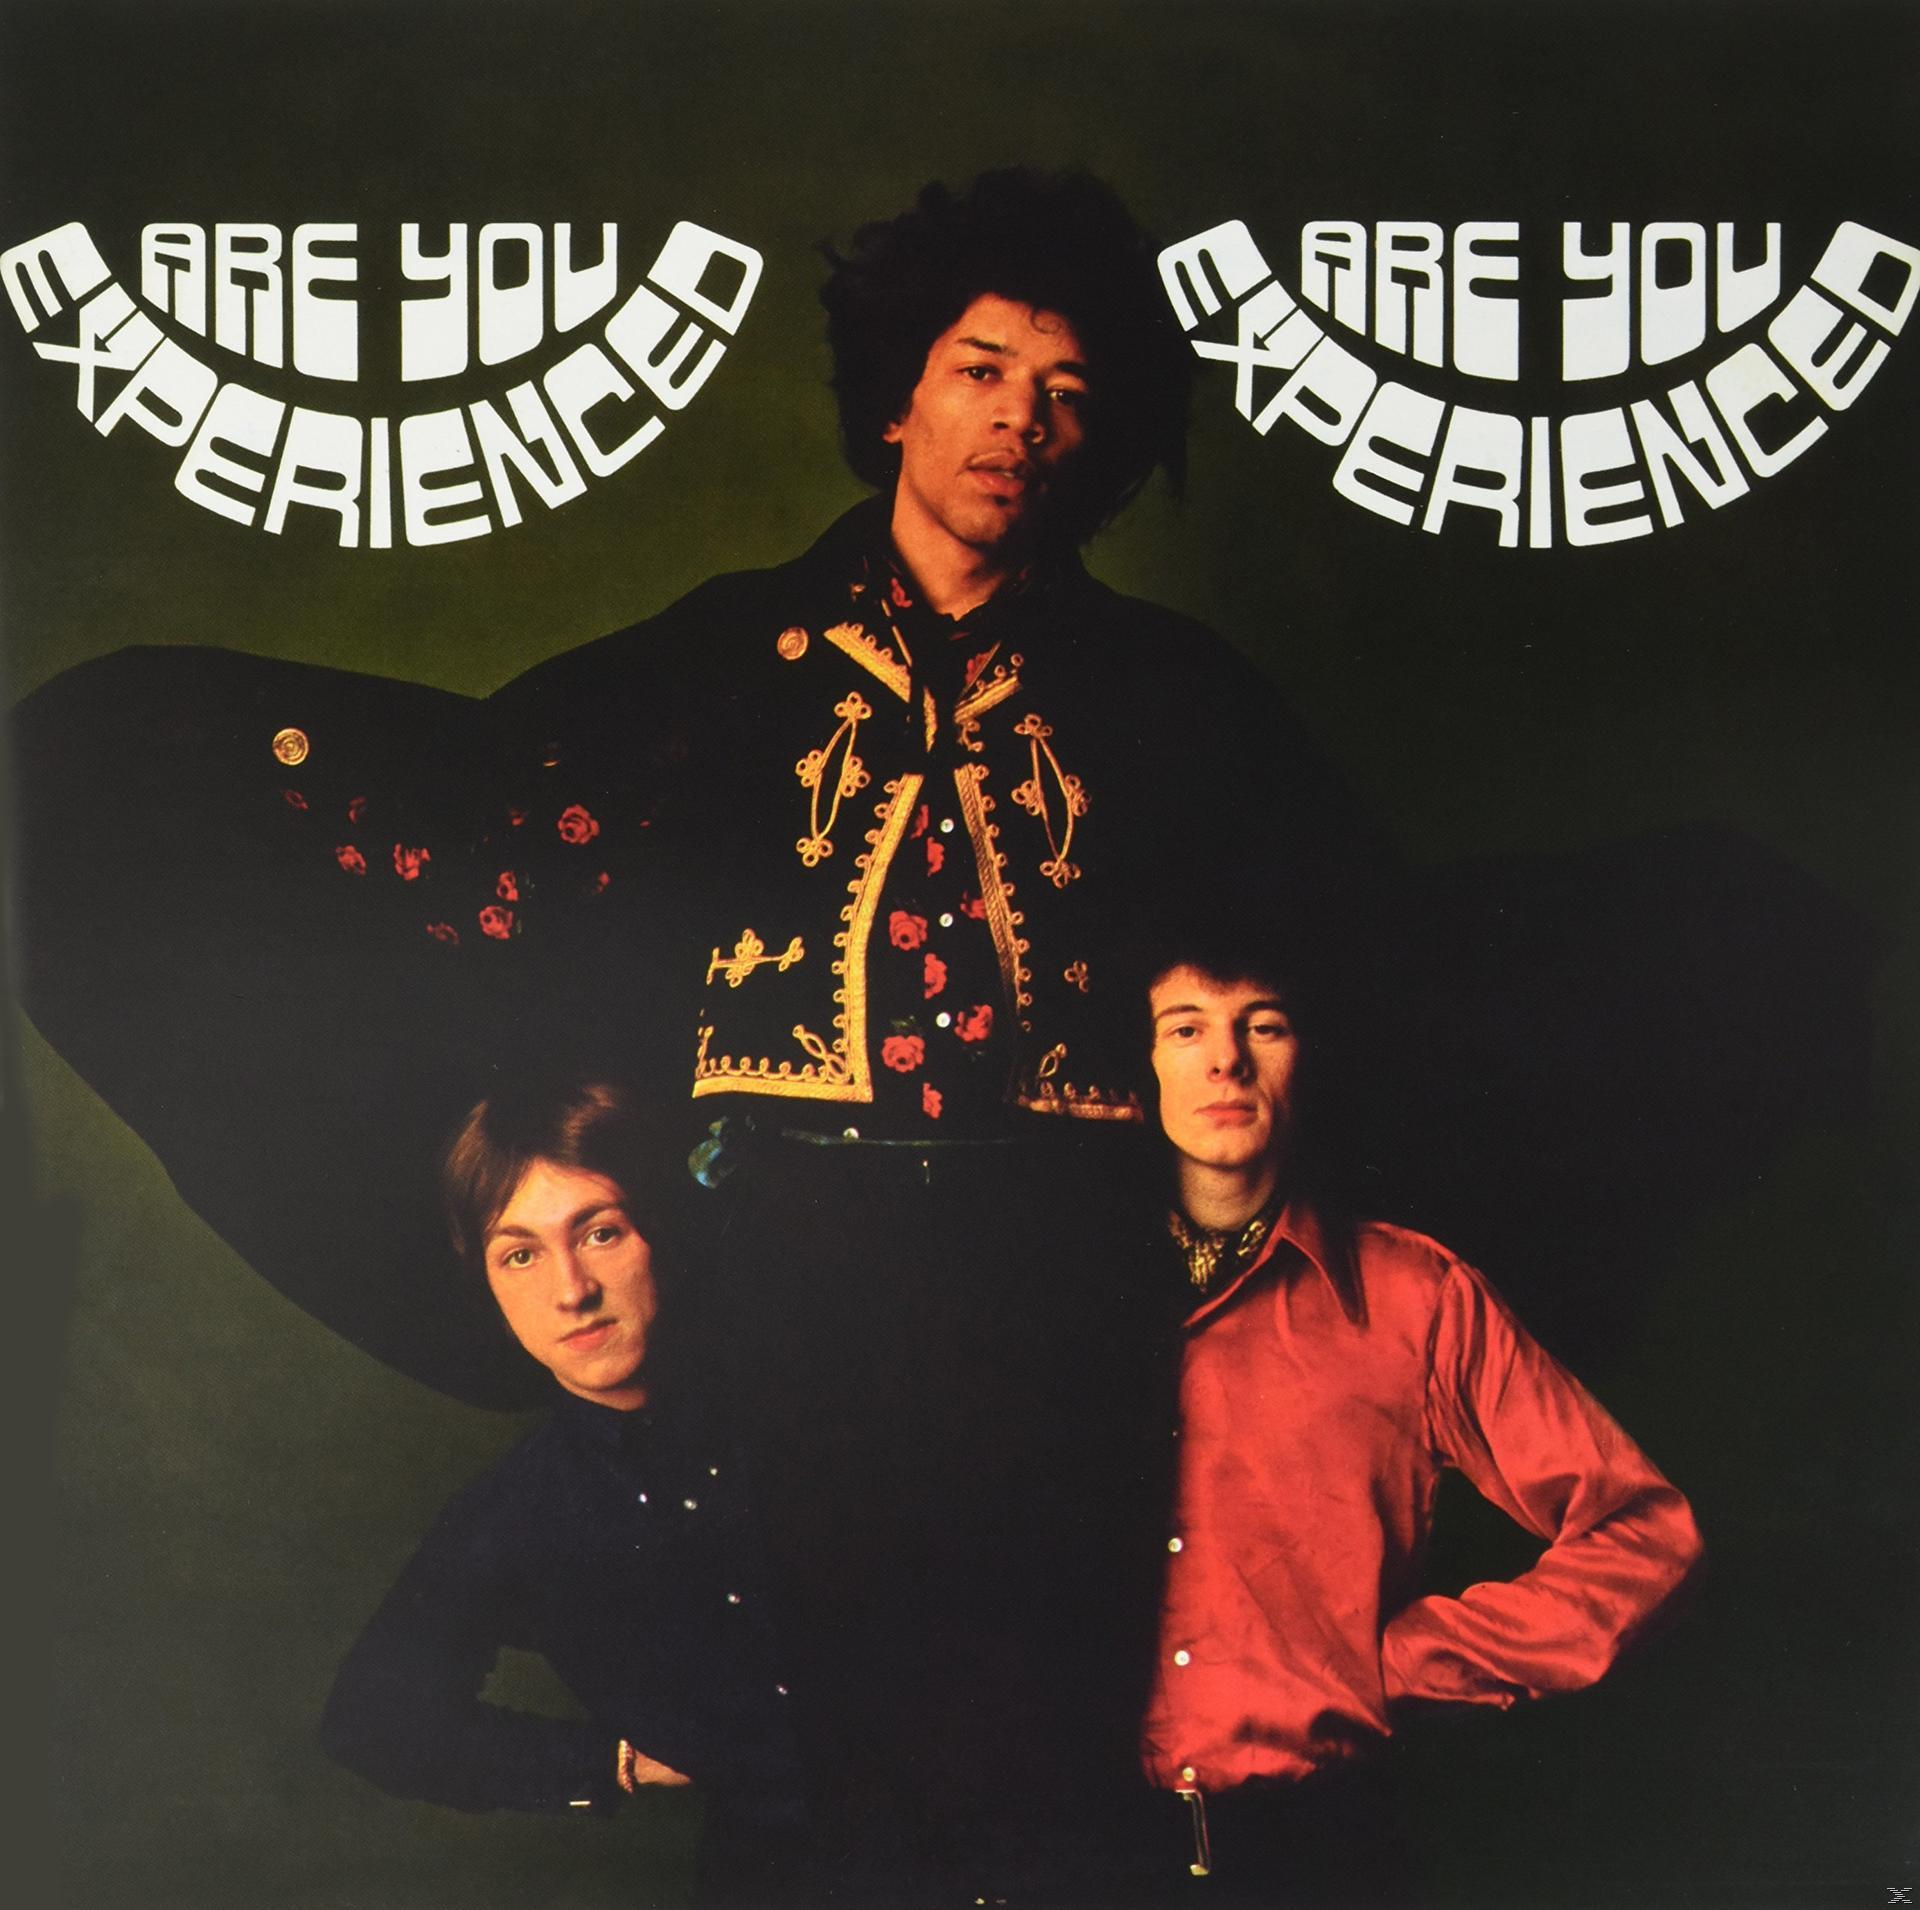 The Jimi Experience experienced - - Hendrix you (Vinyl) Are